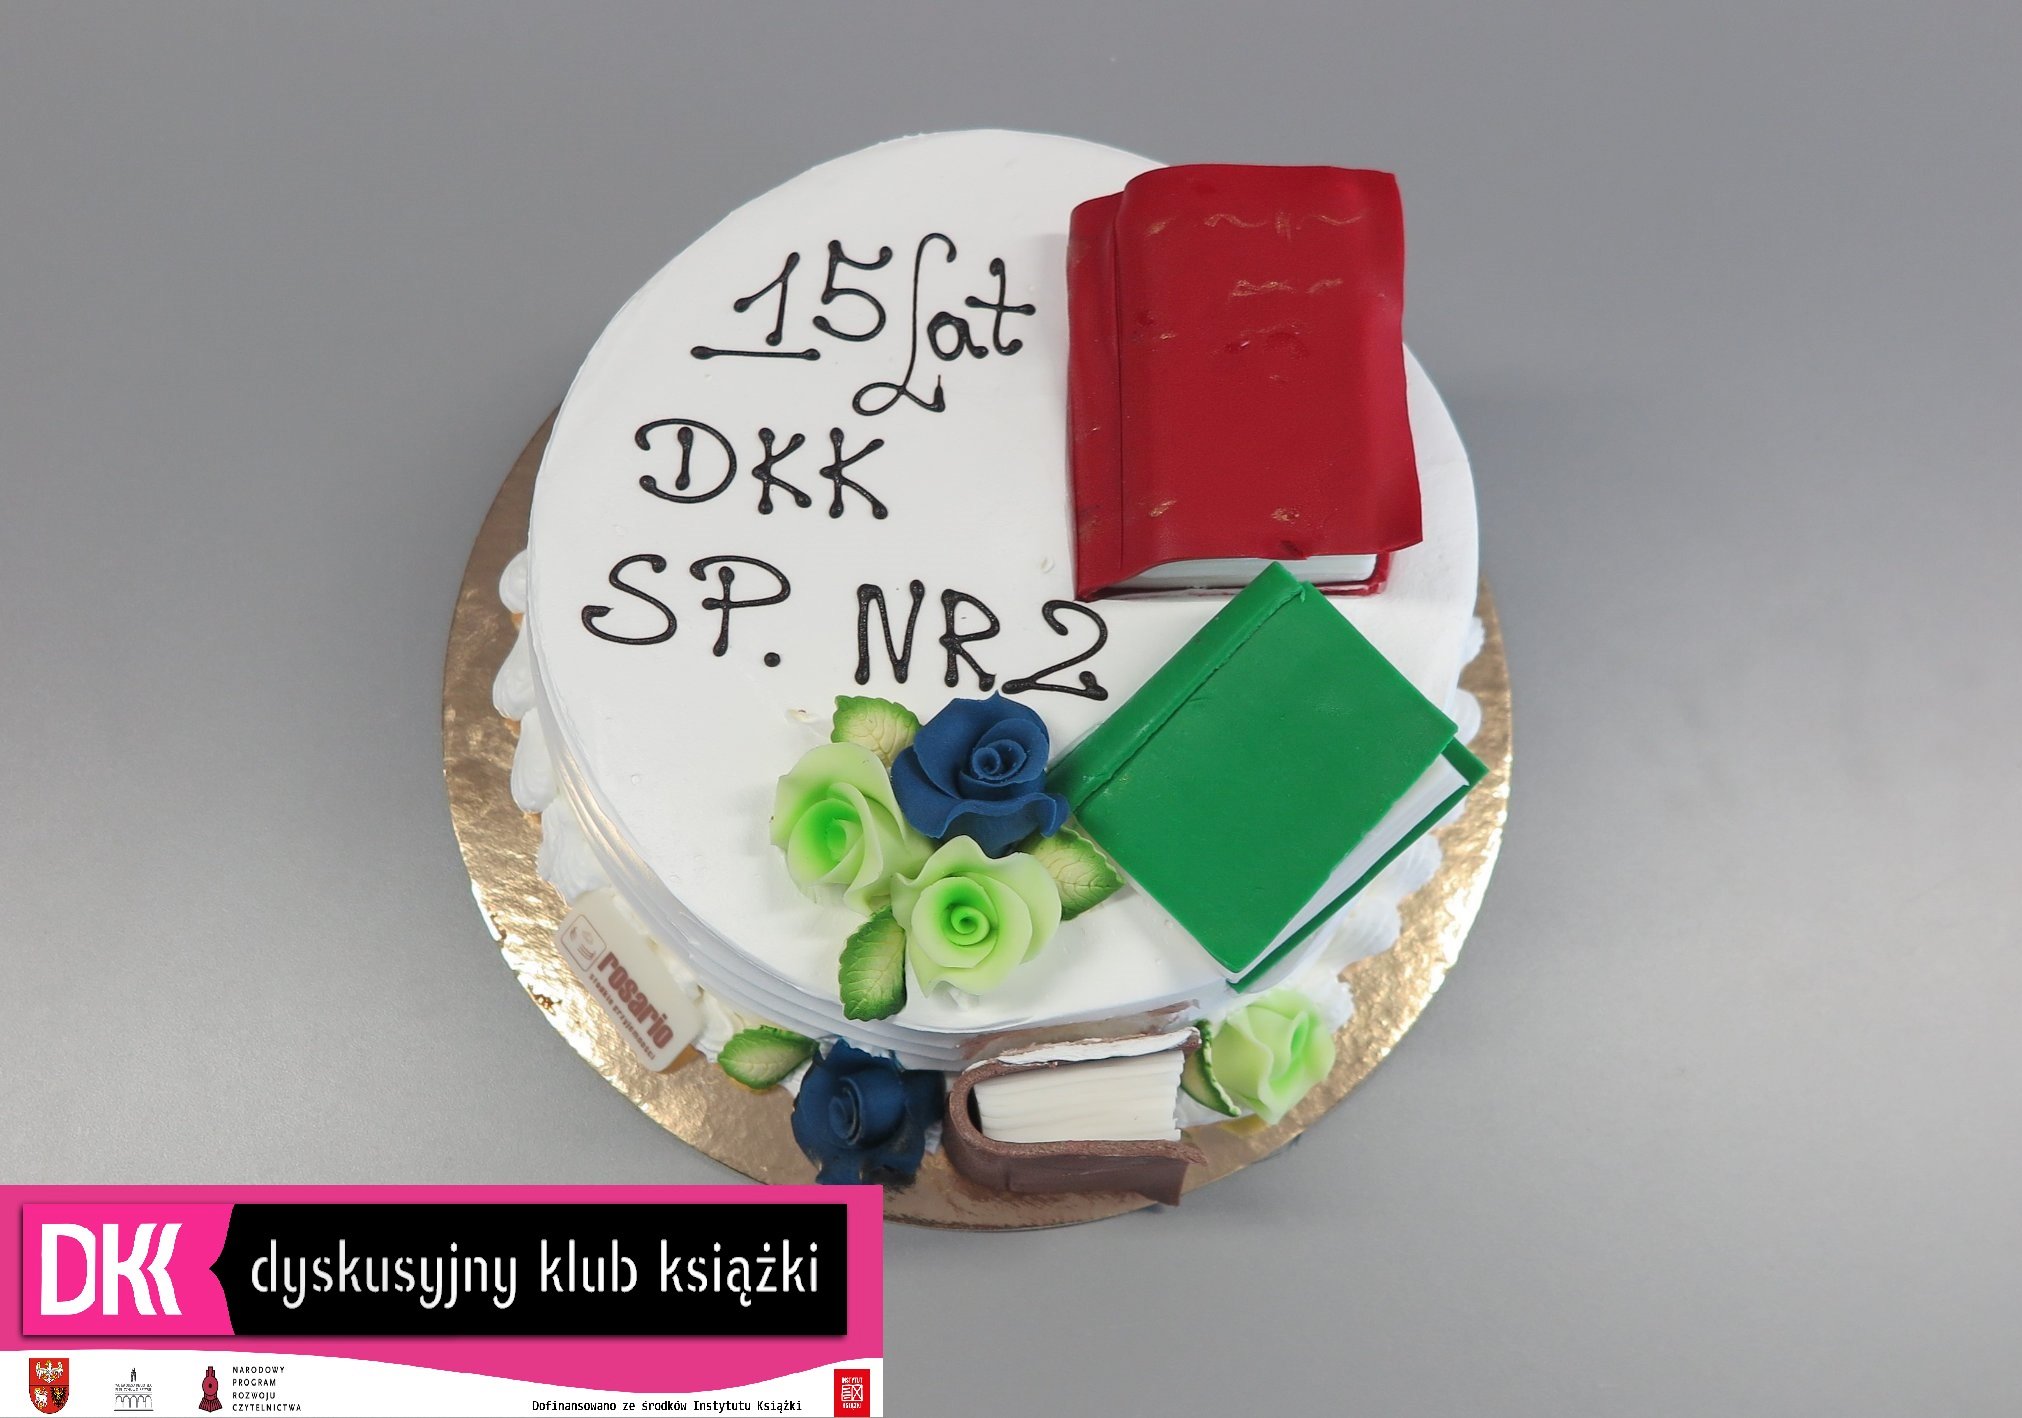 tort z napisem 15 lat DKK SP. nr2, logo dkk na dole